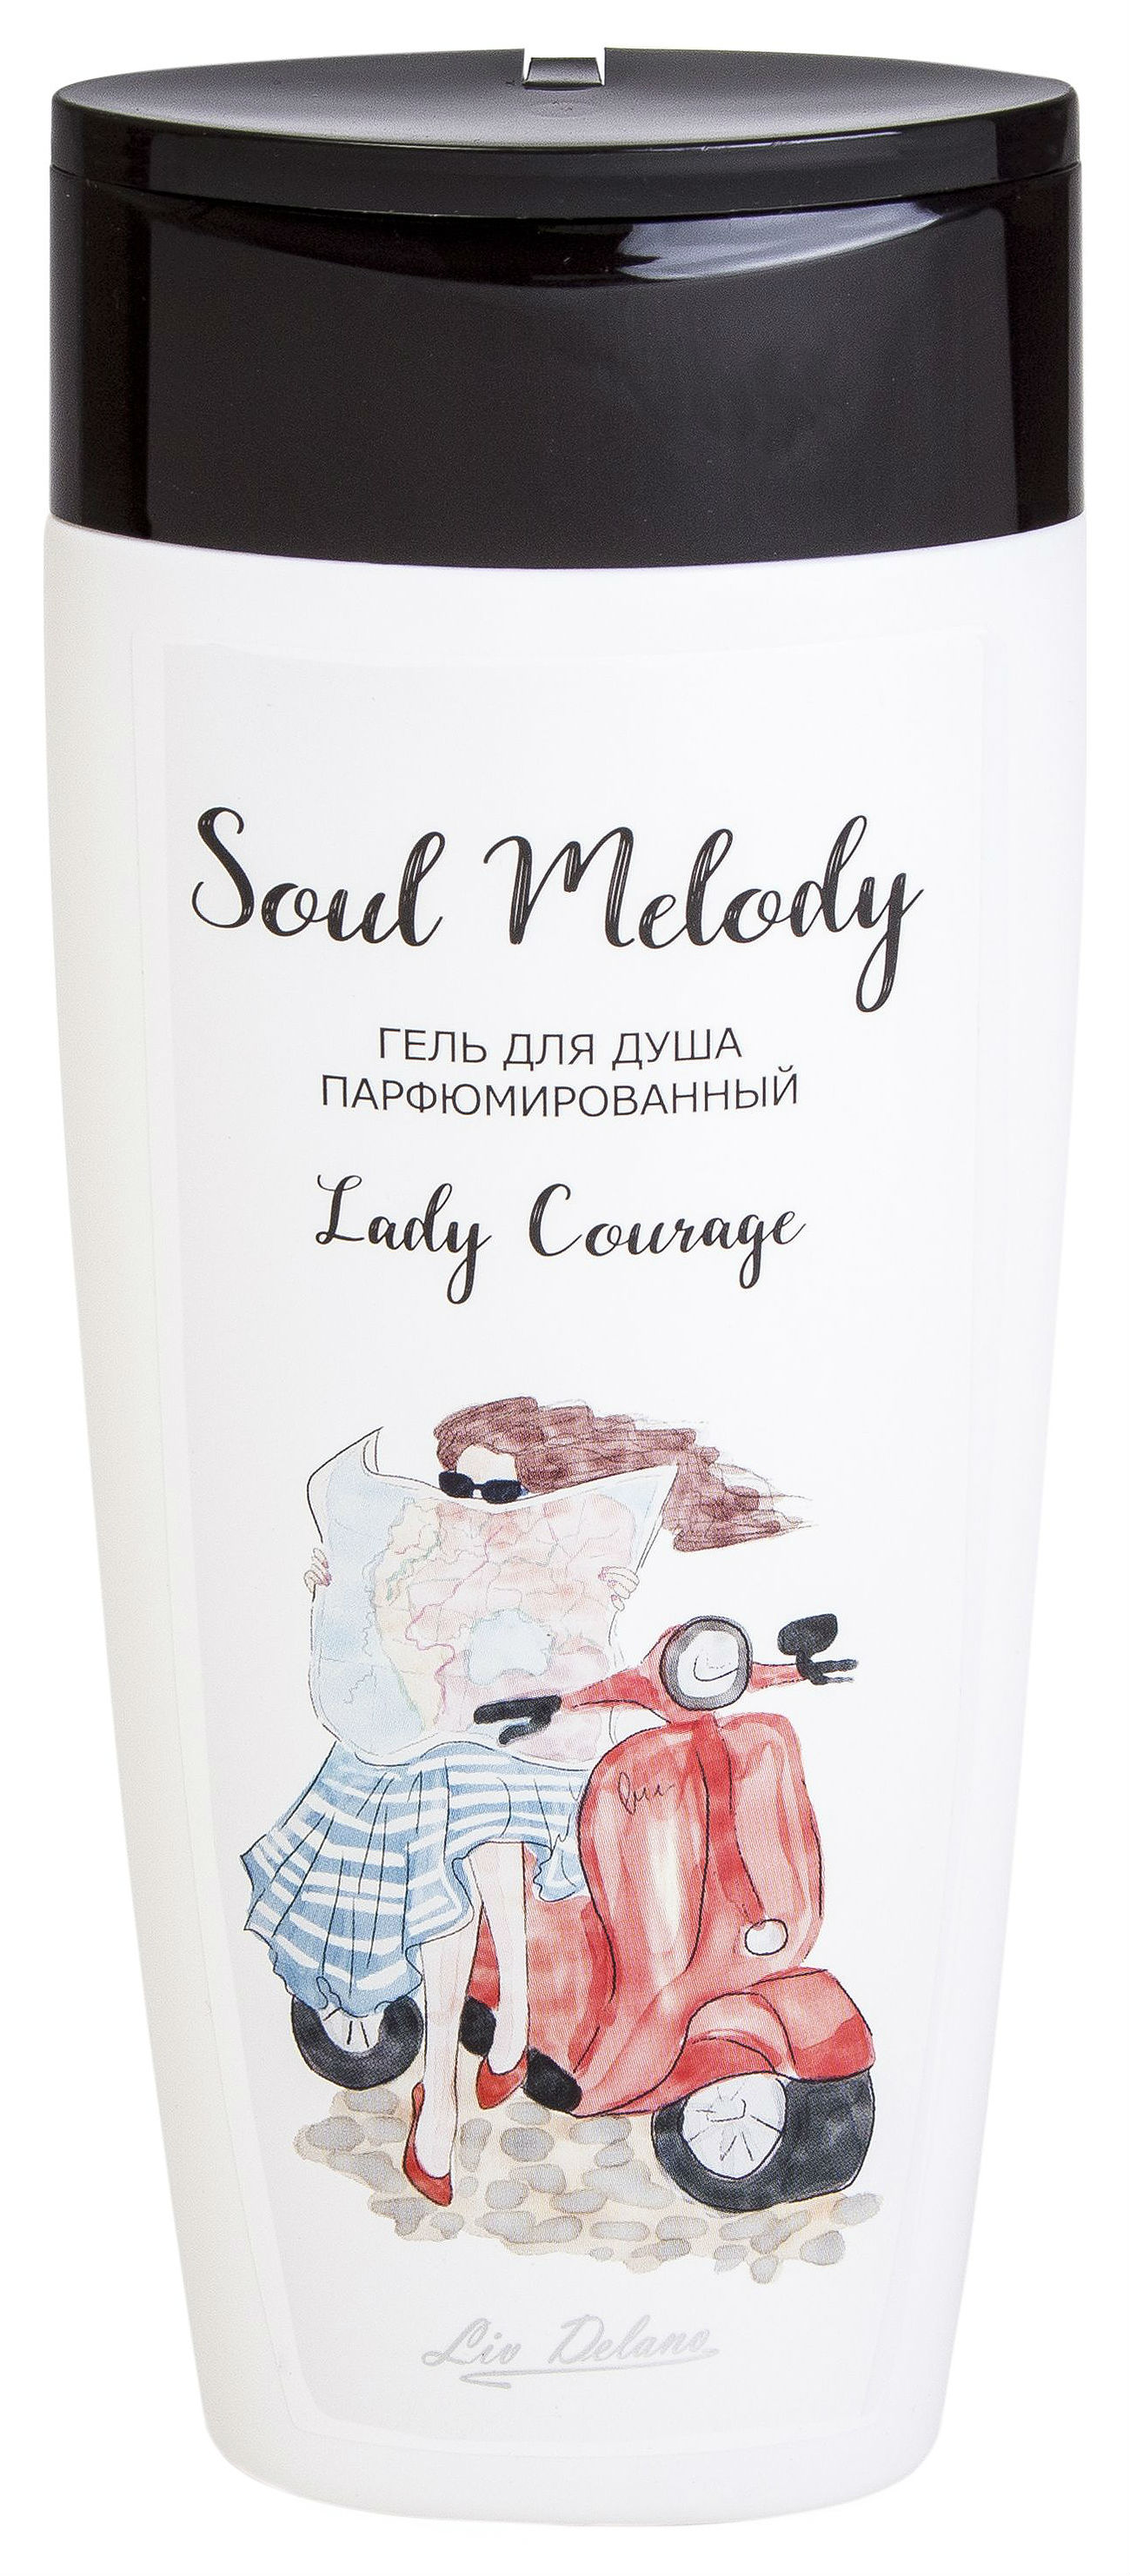 Гель для душа Liv Delano Lady Courage, 250 г liv delano антиперспирант lady courage soul melody 50 0